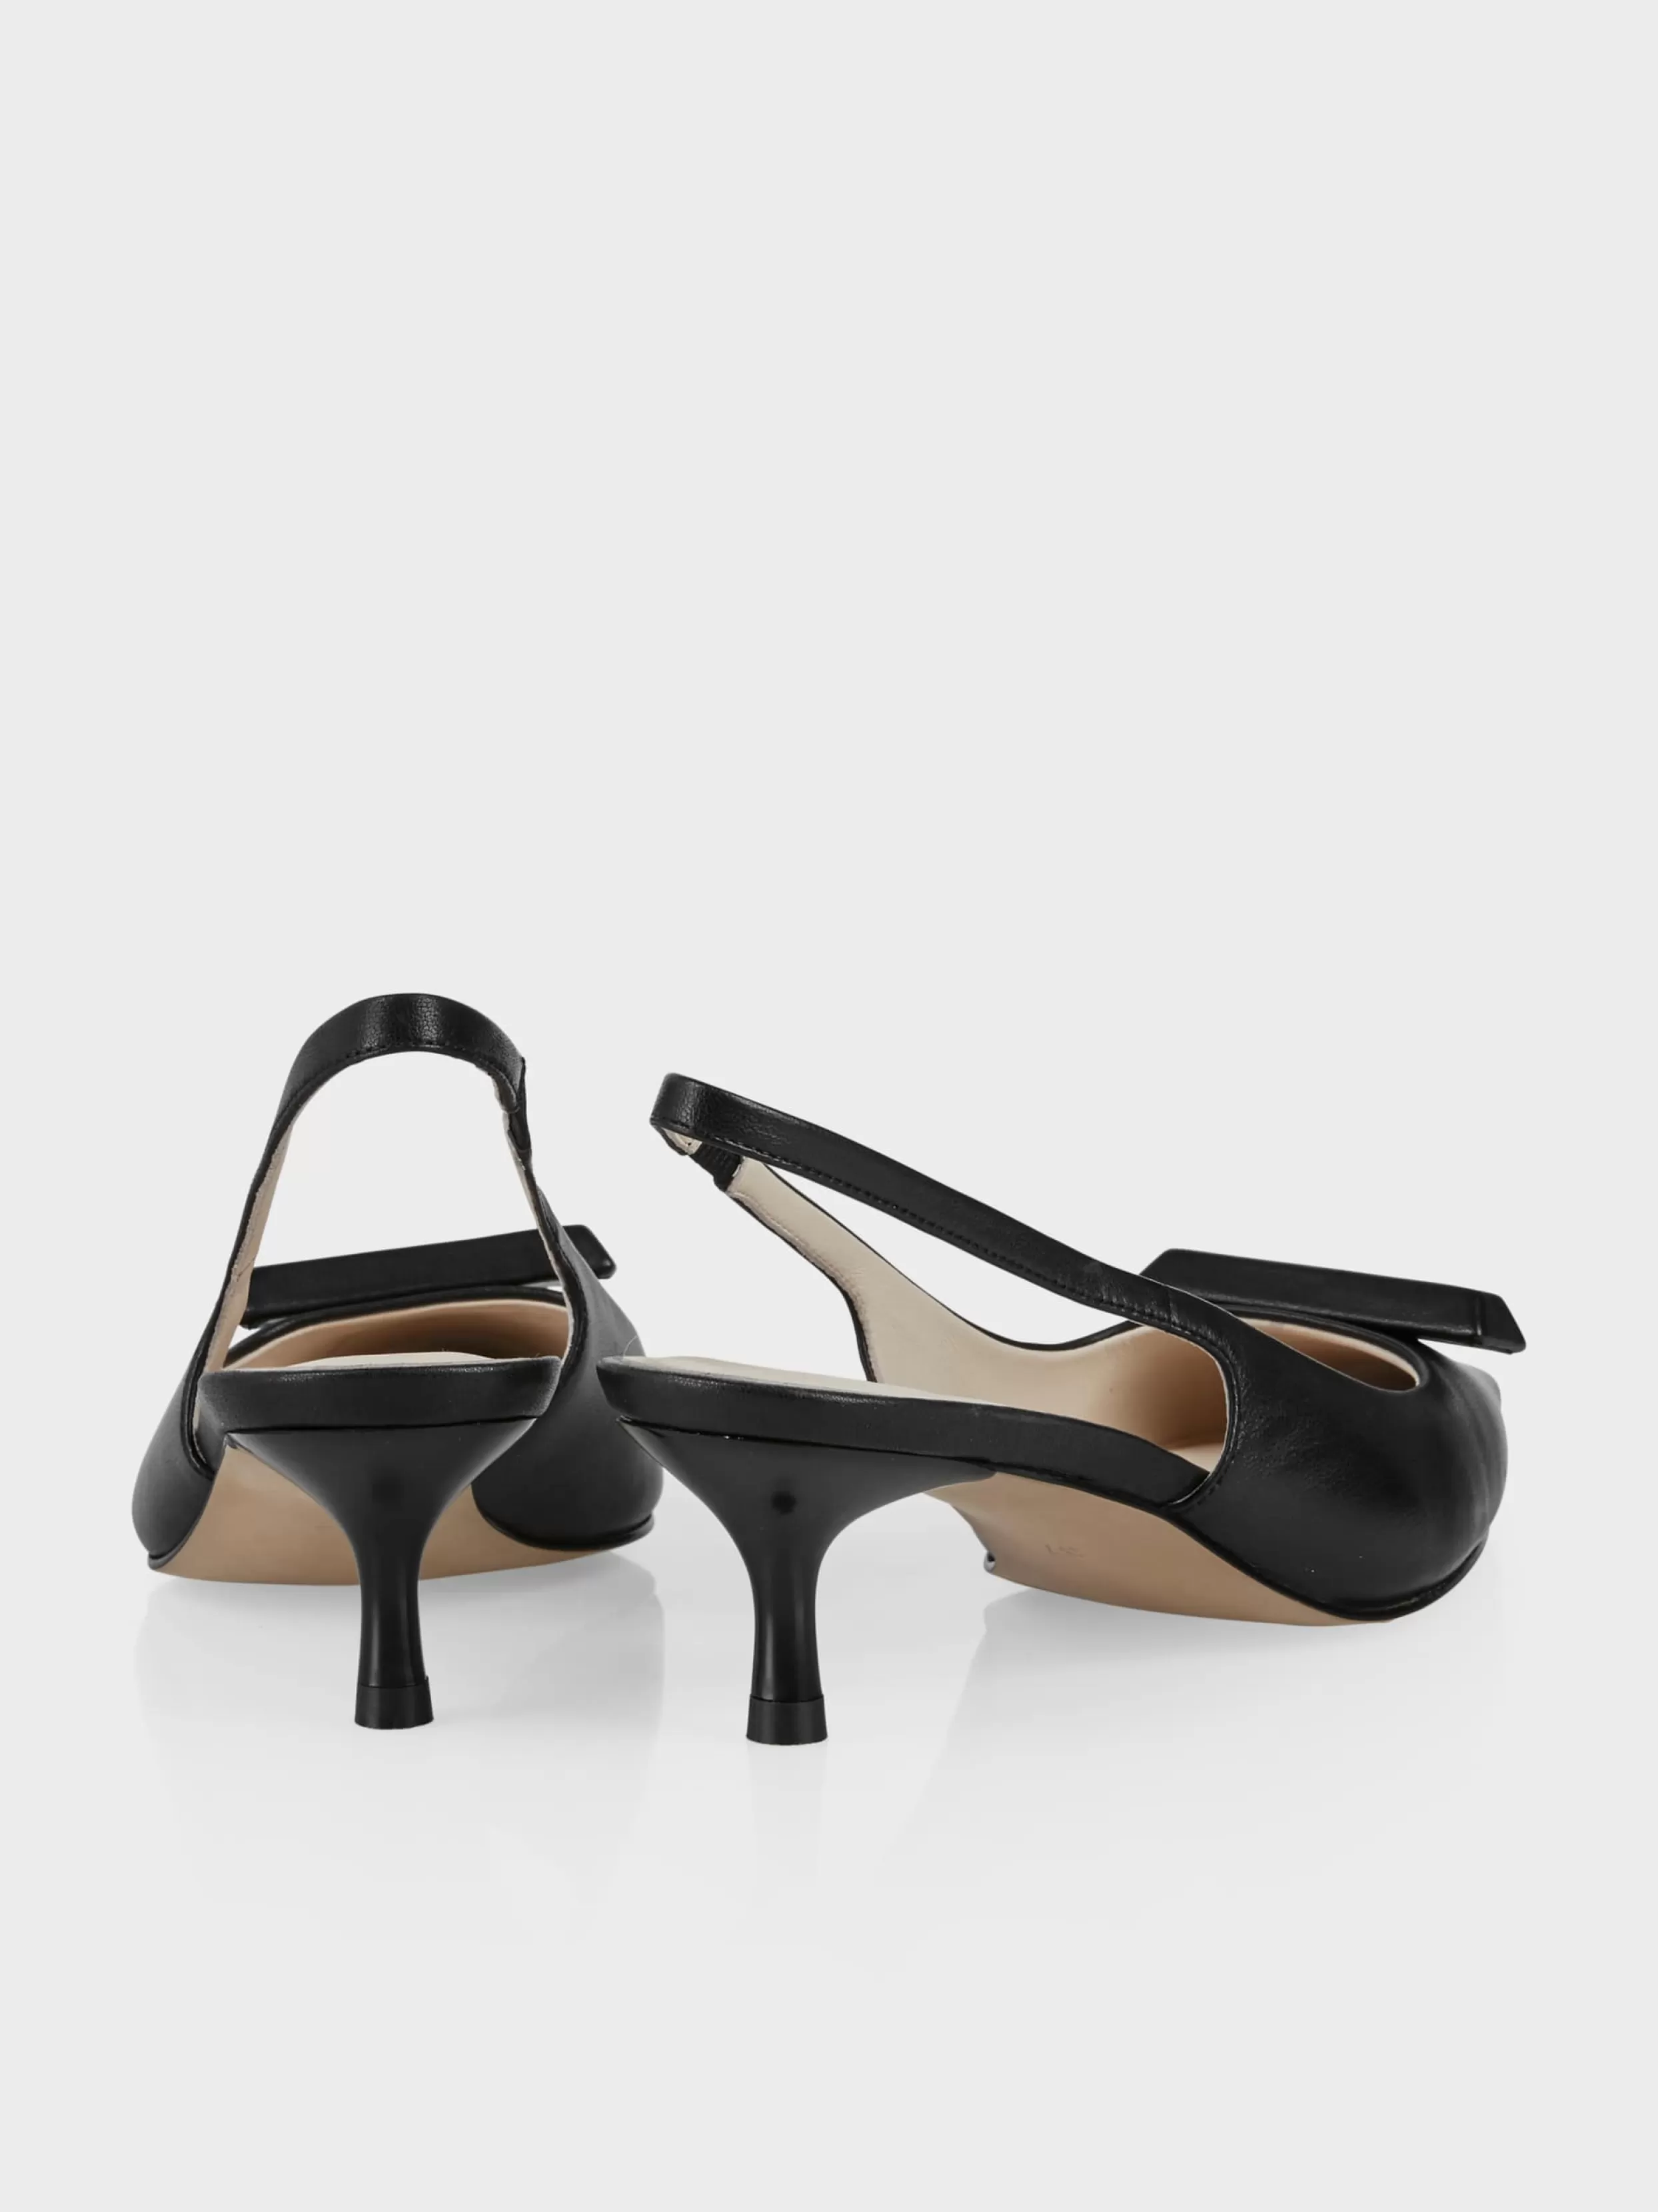 Marc Cain Fifties style leather slingbacks | Shoes